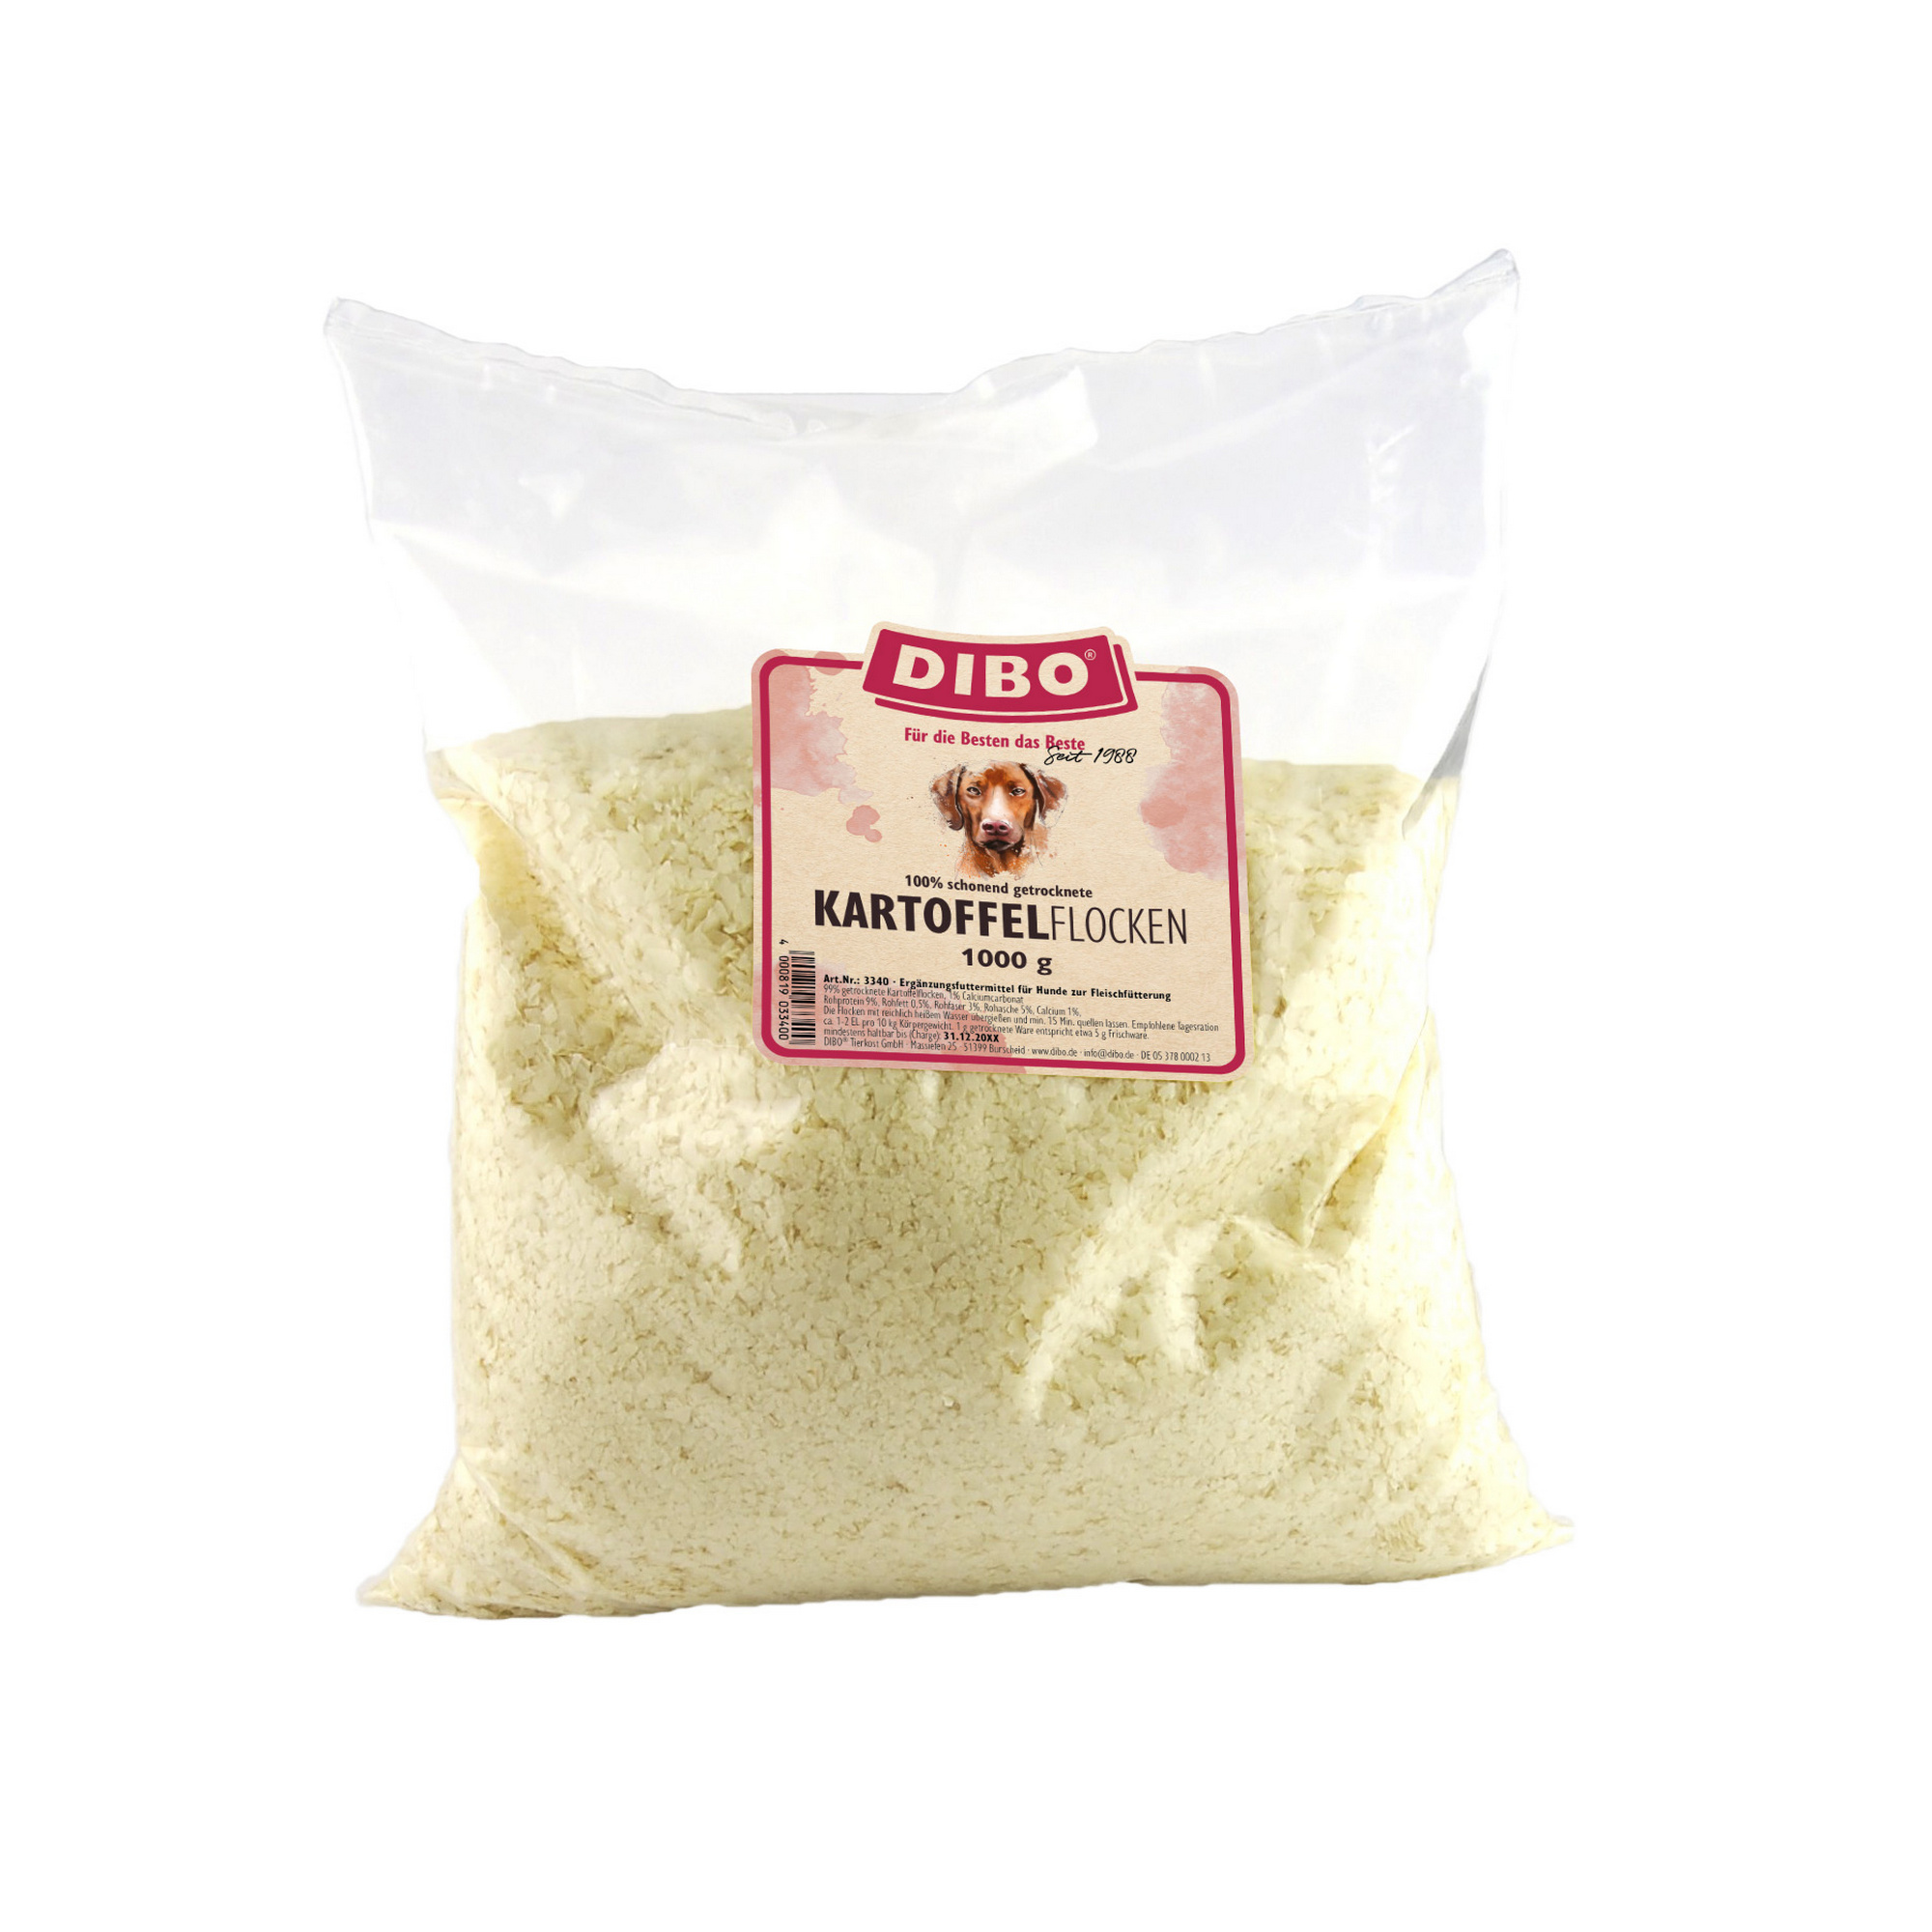 Kartoffelflocken 1 Kg DIBO + product picture